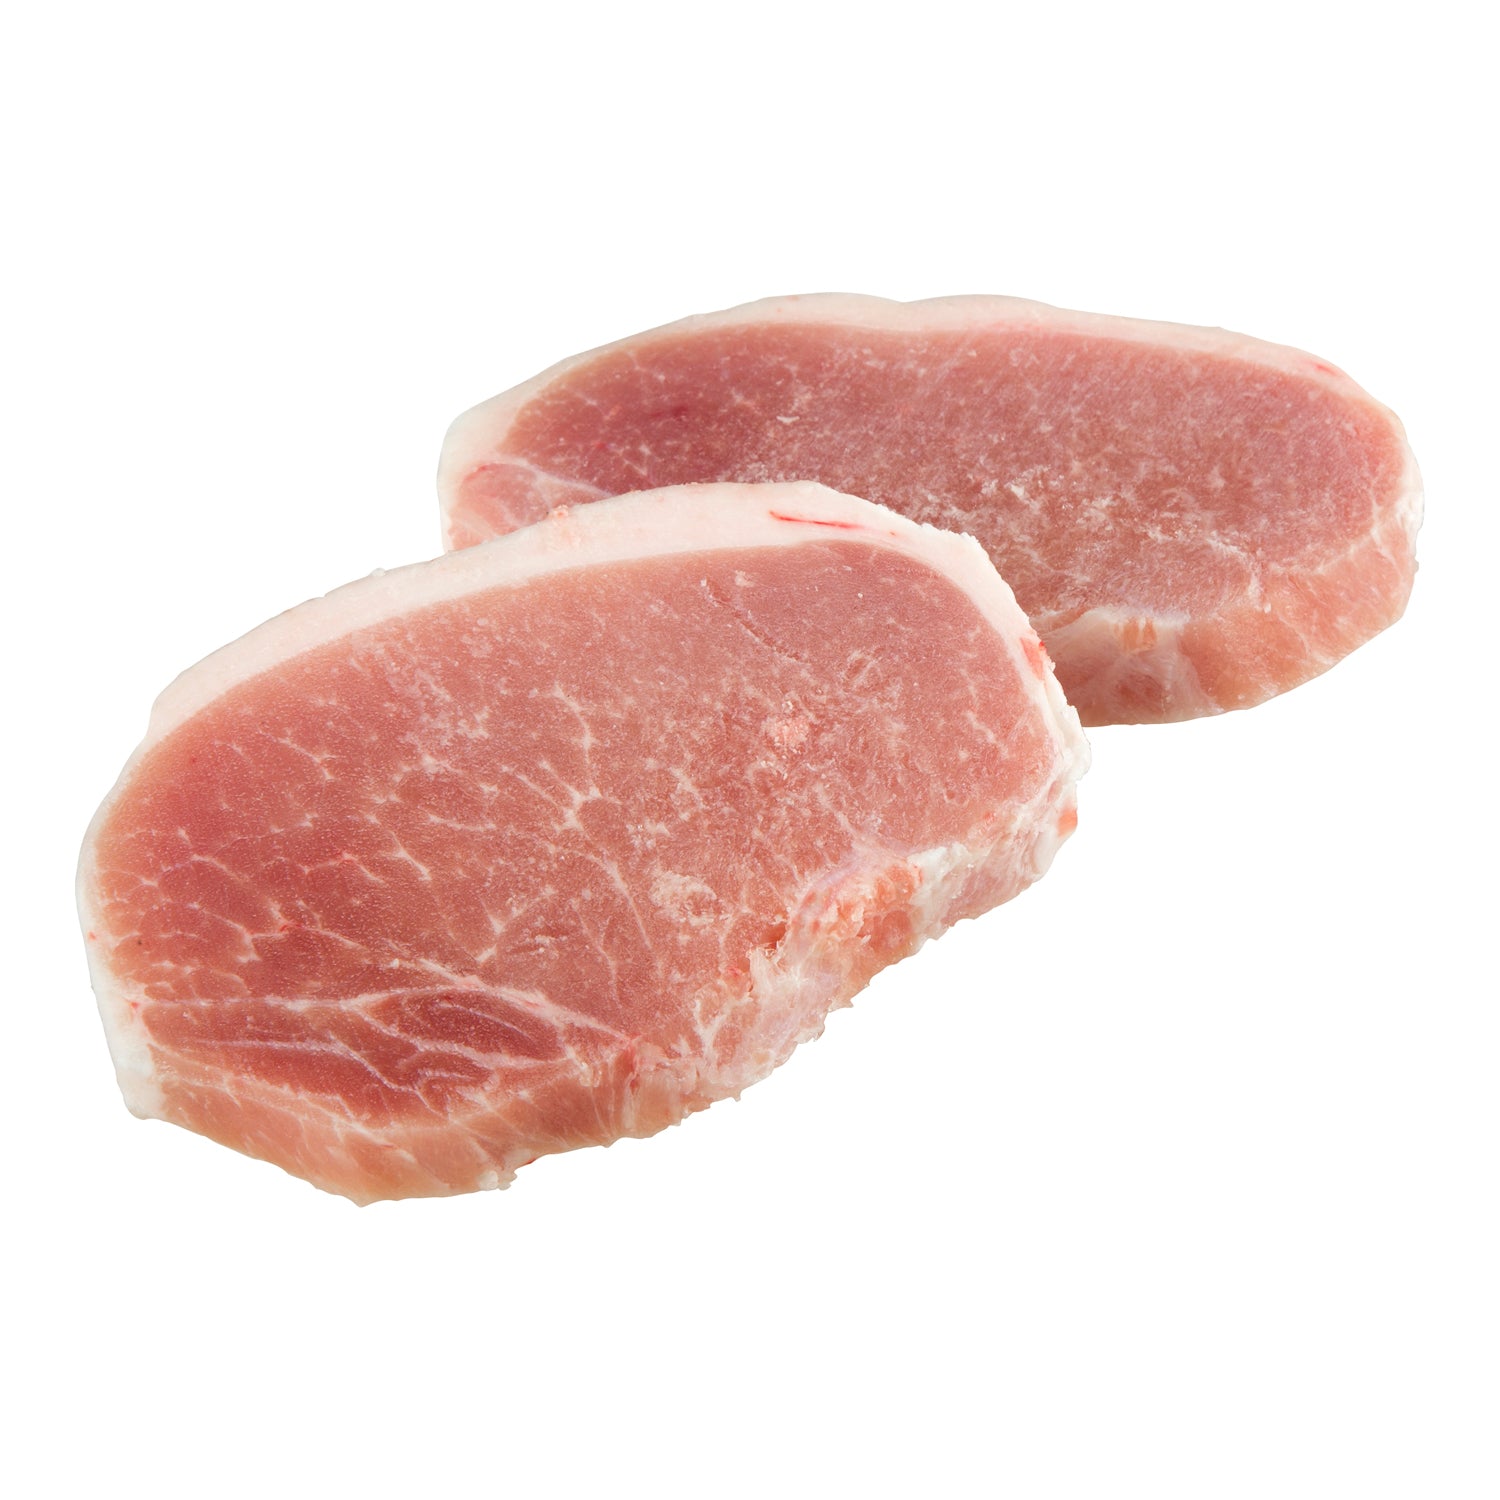 Buckhead Pride Boneless Center Cut Pork Chops 40x113g [$2.24/ea]